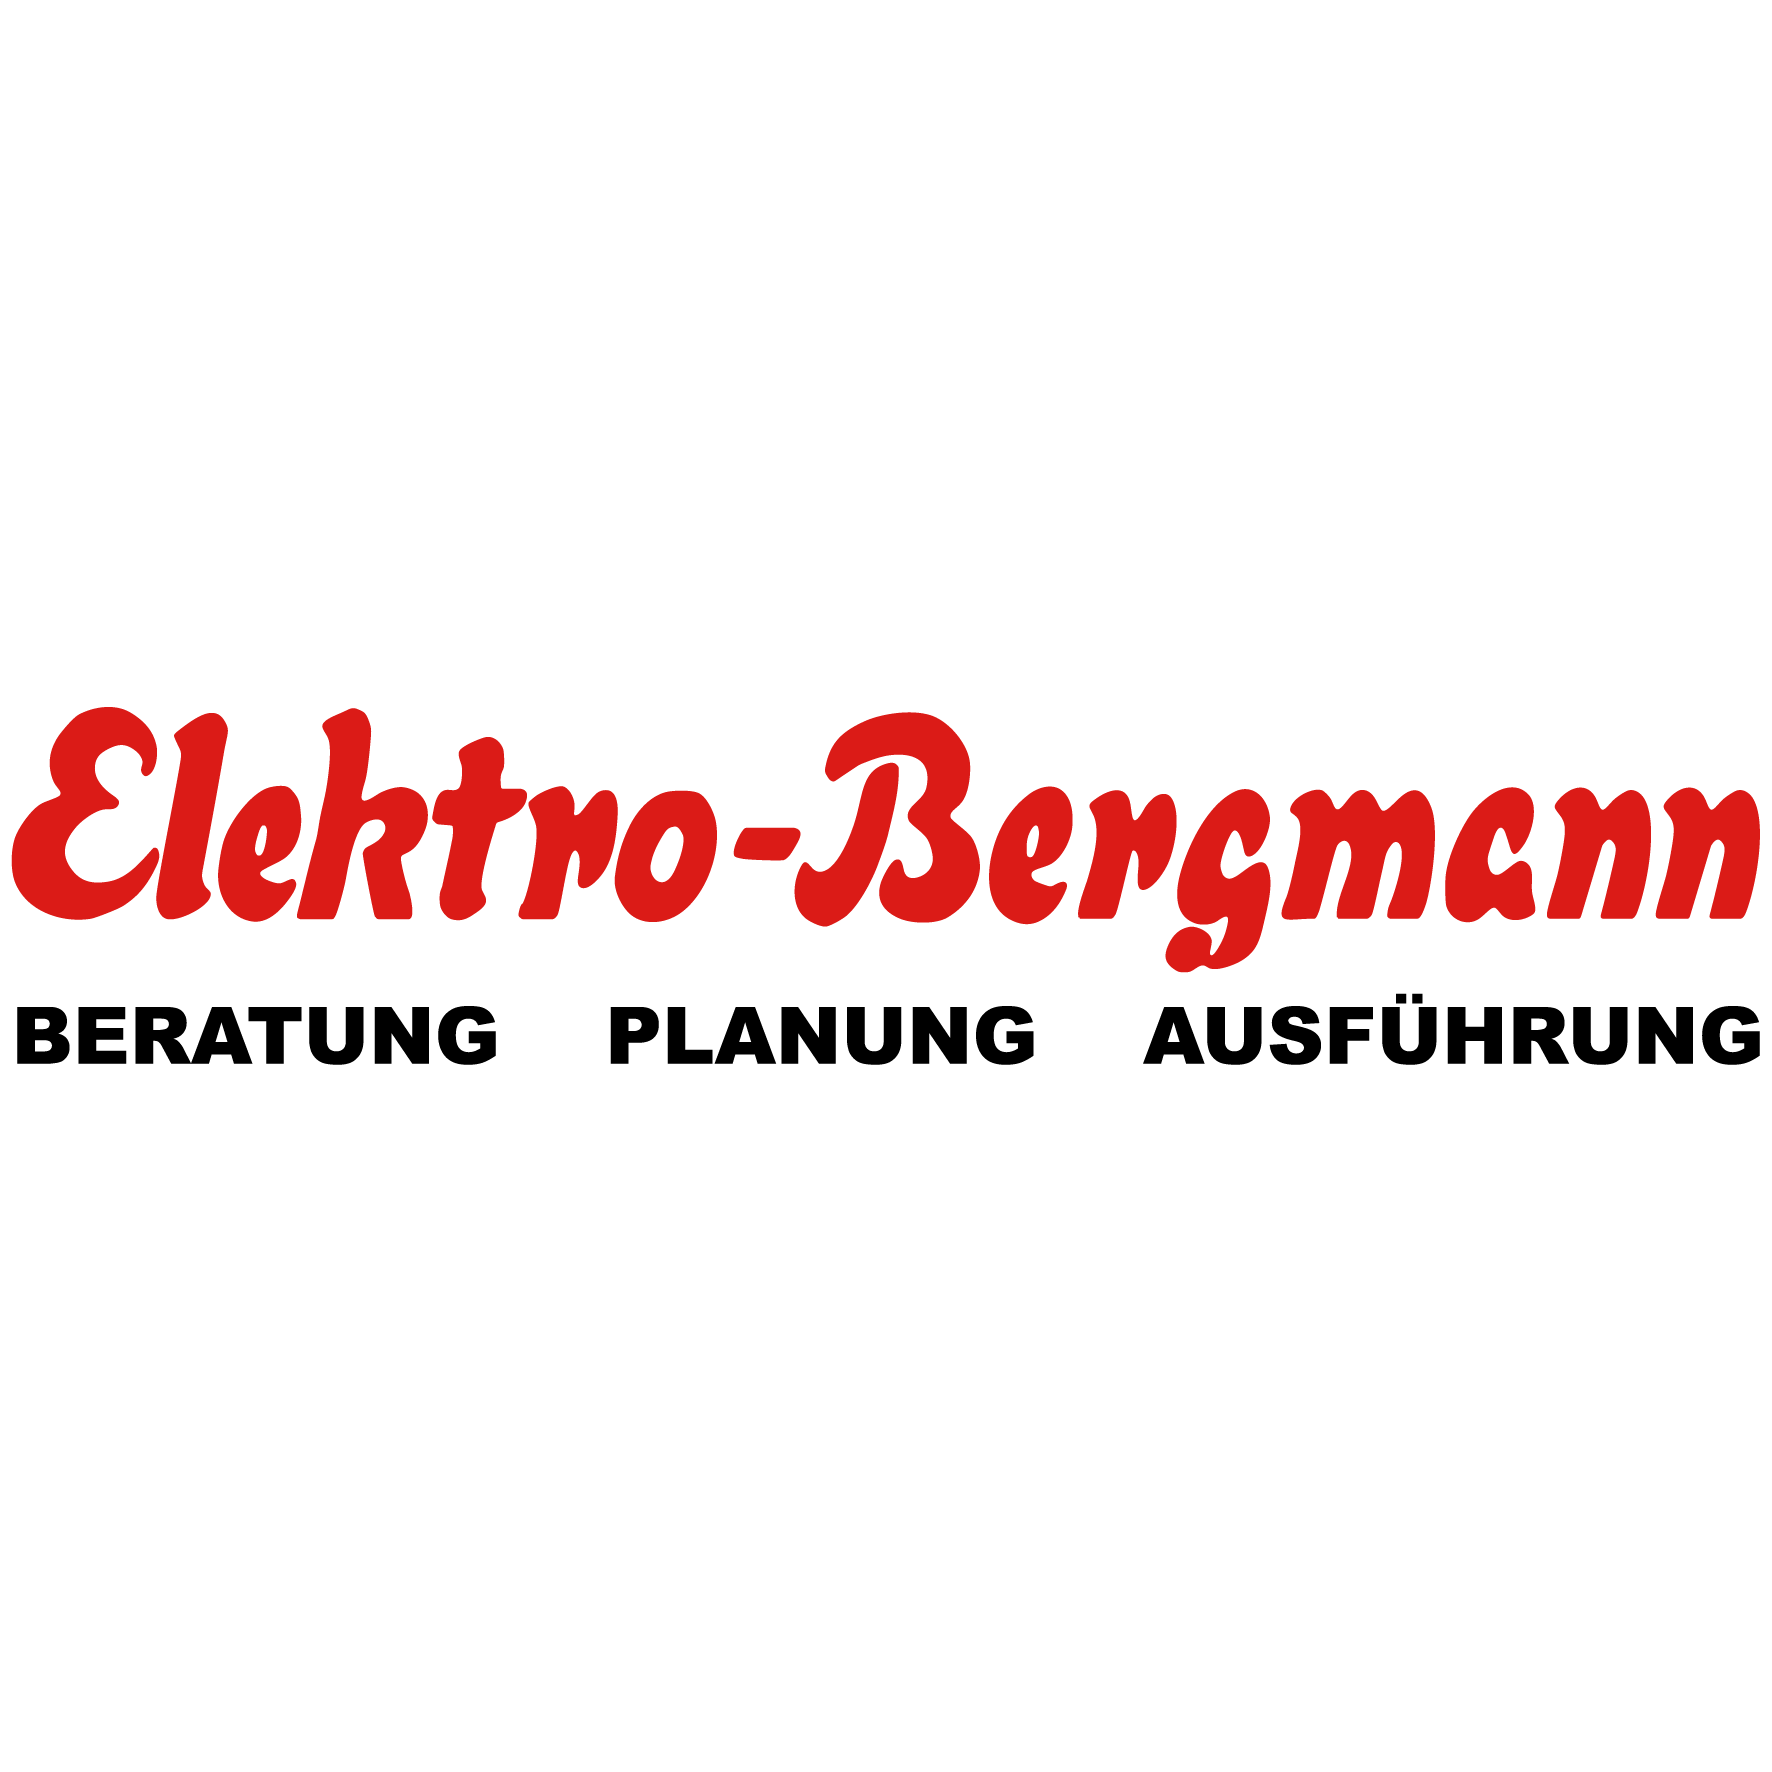 ELEKTRO-BERGMANN GMBH in Hameln - Logo